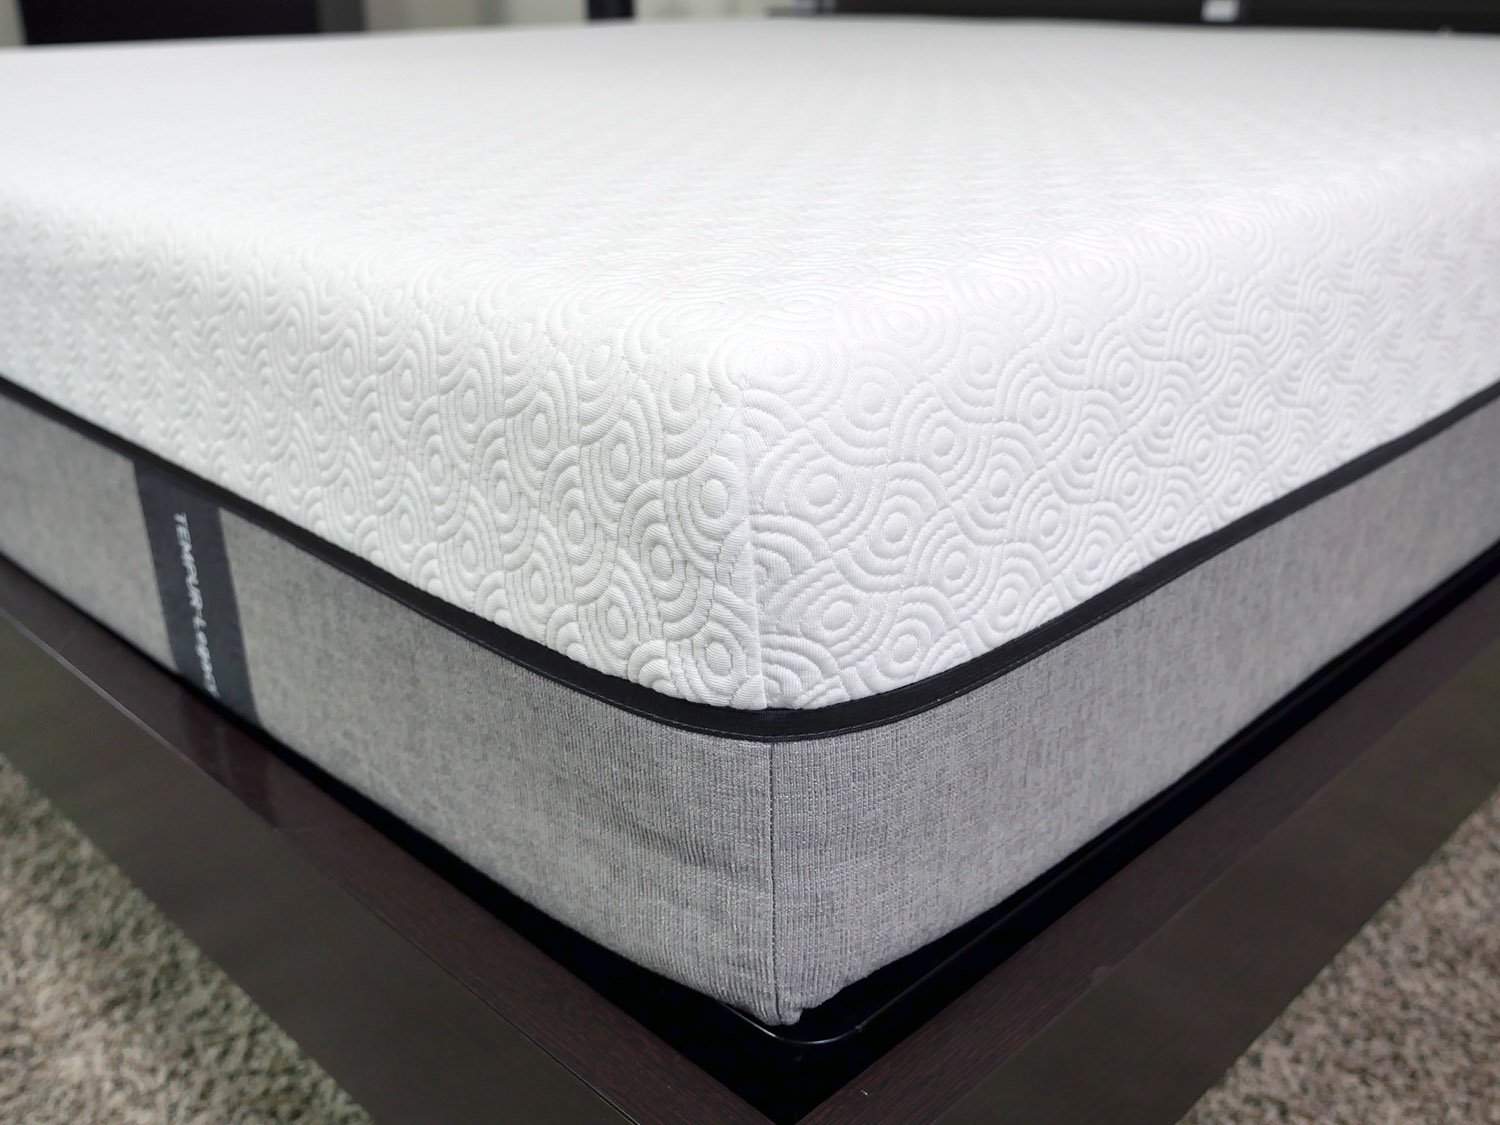 tempurpedic stay cool mattress cover